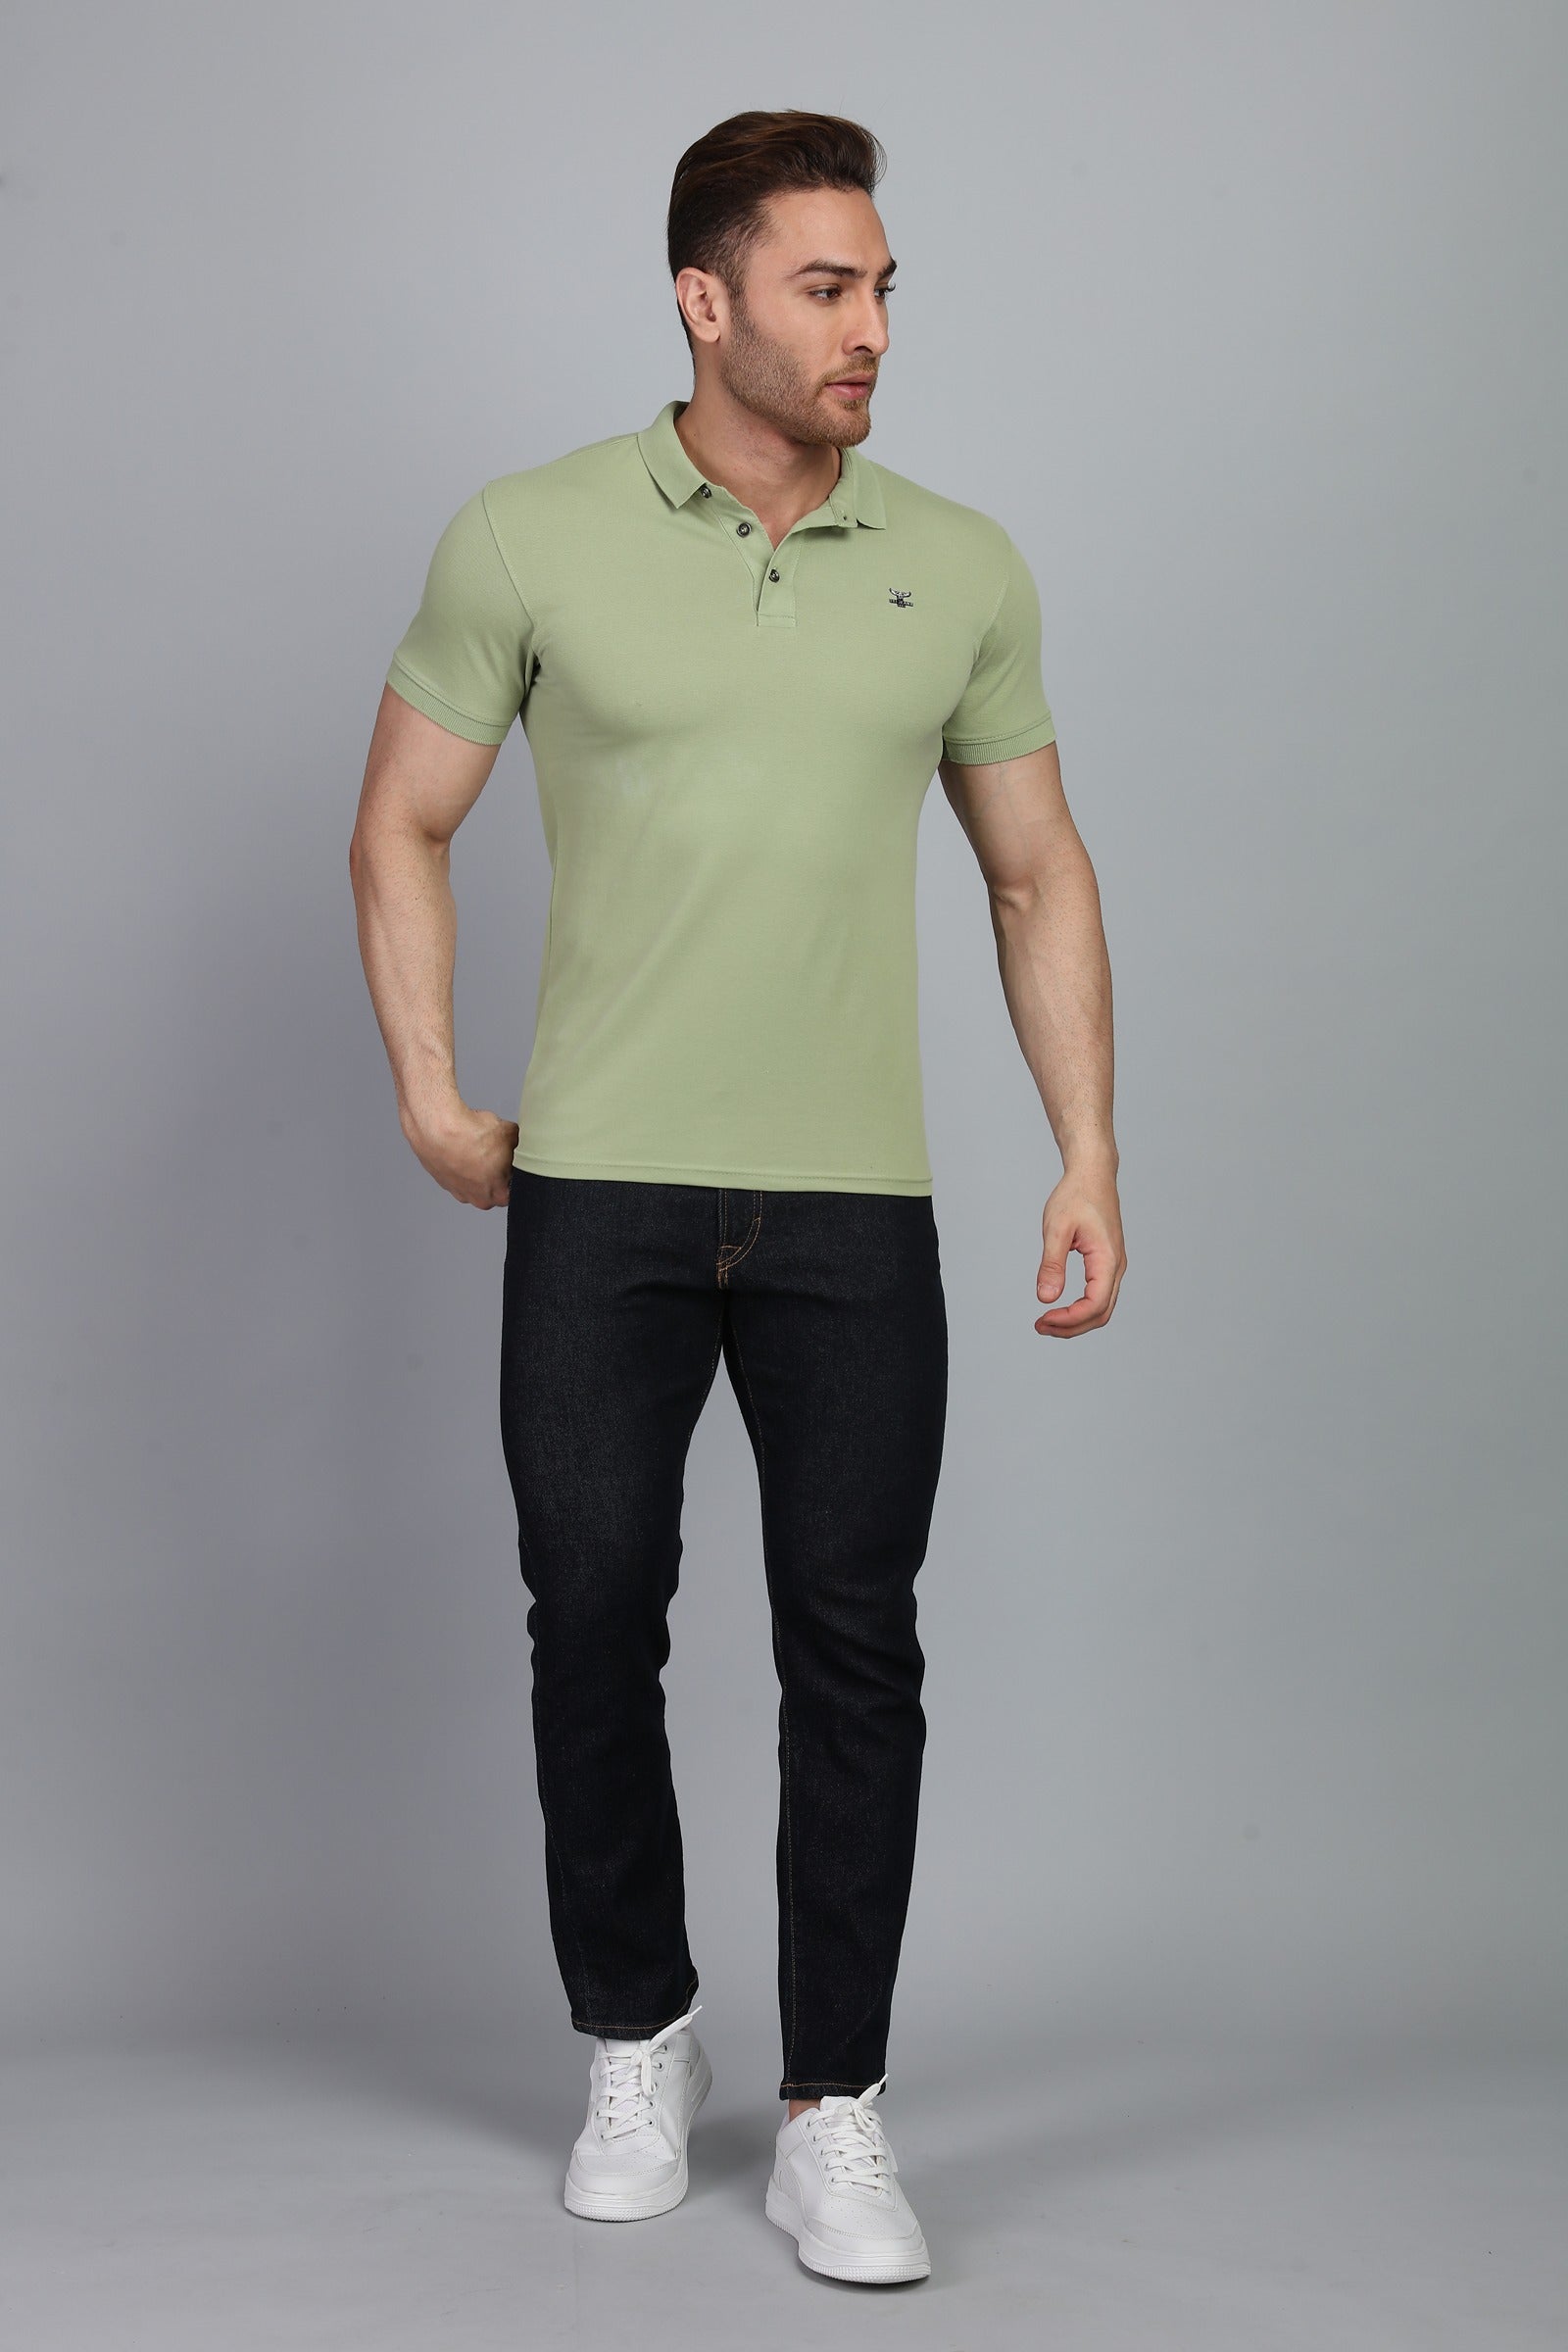 KIK33 Men's Plus Size POLO T-Shirt, Regular Fit, Half Sleeves with Pocket  mens plus size